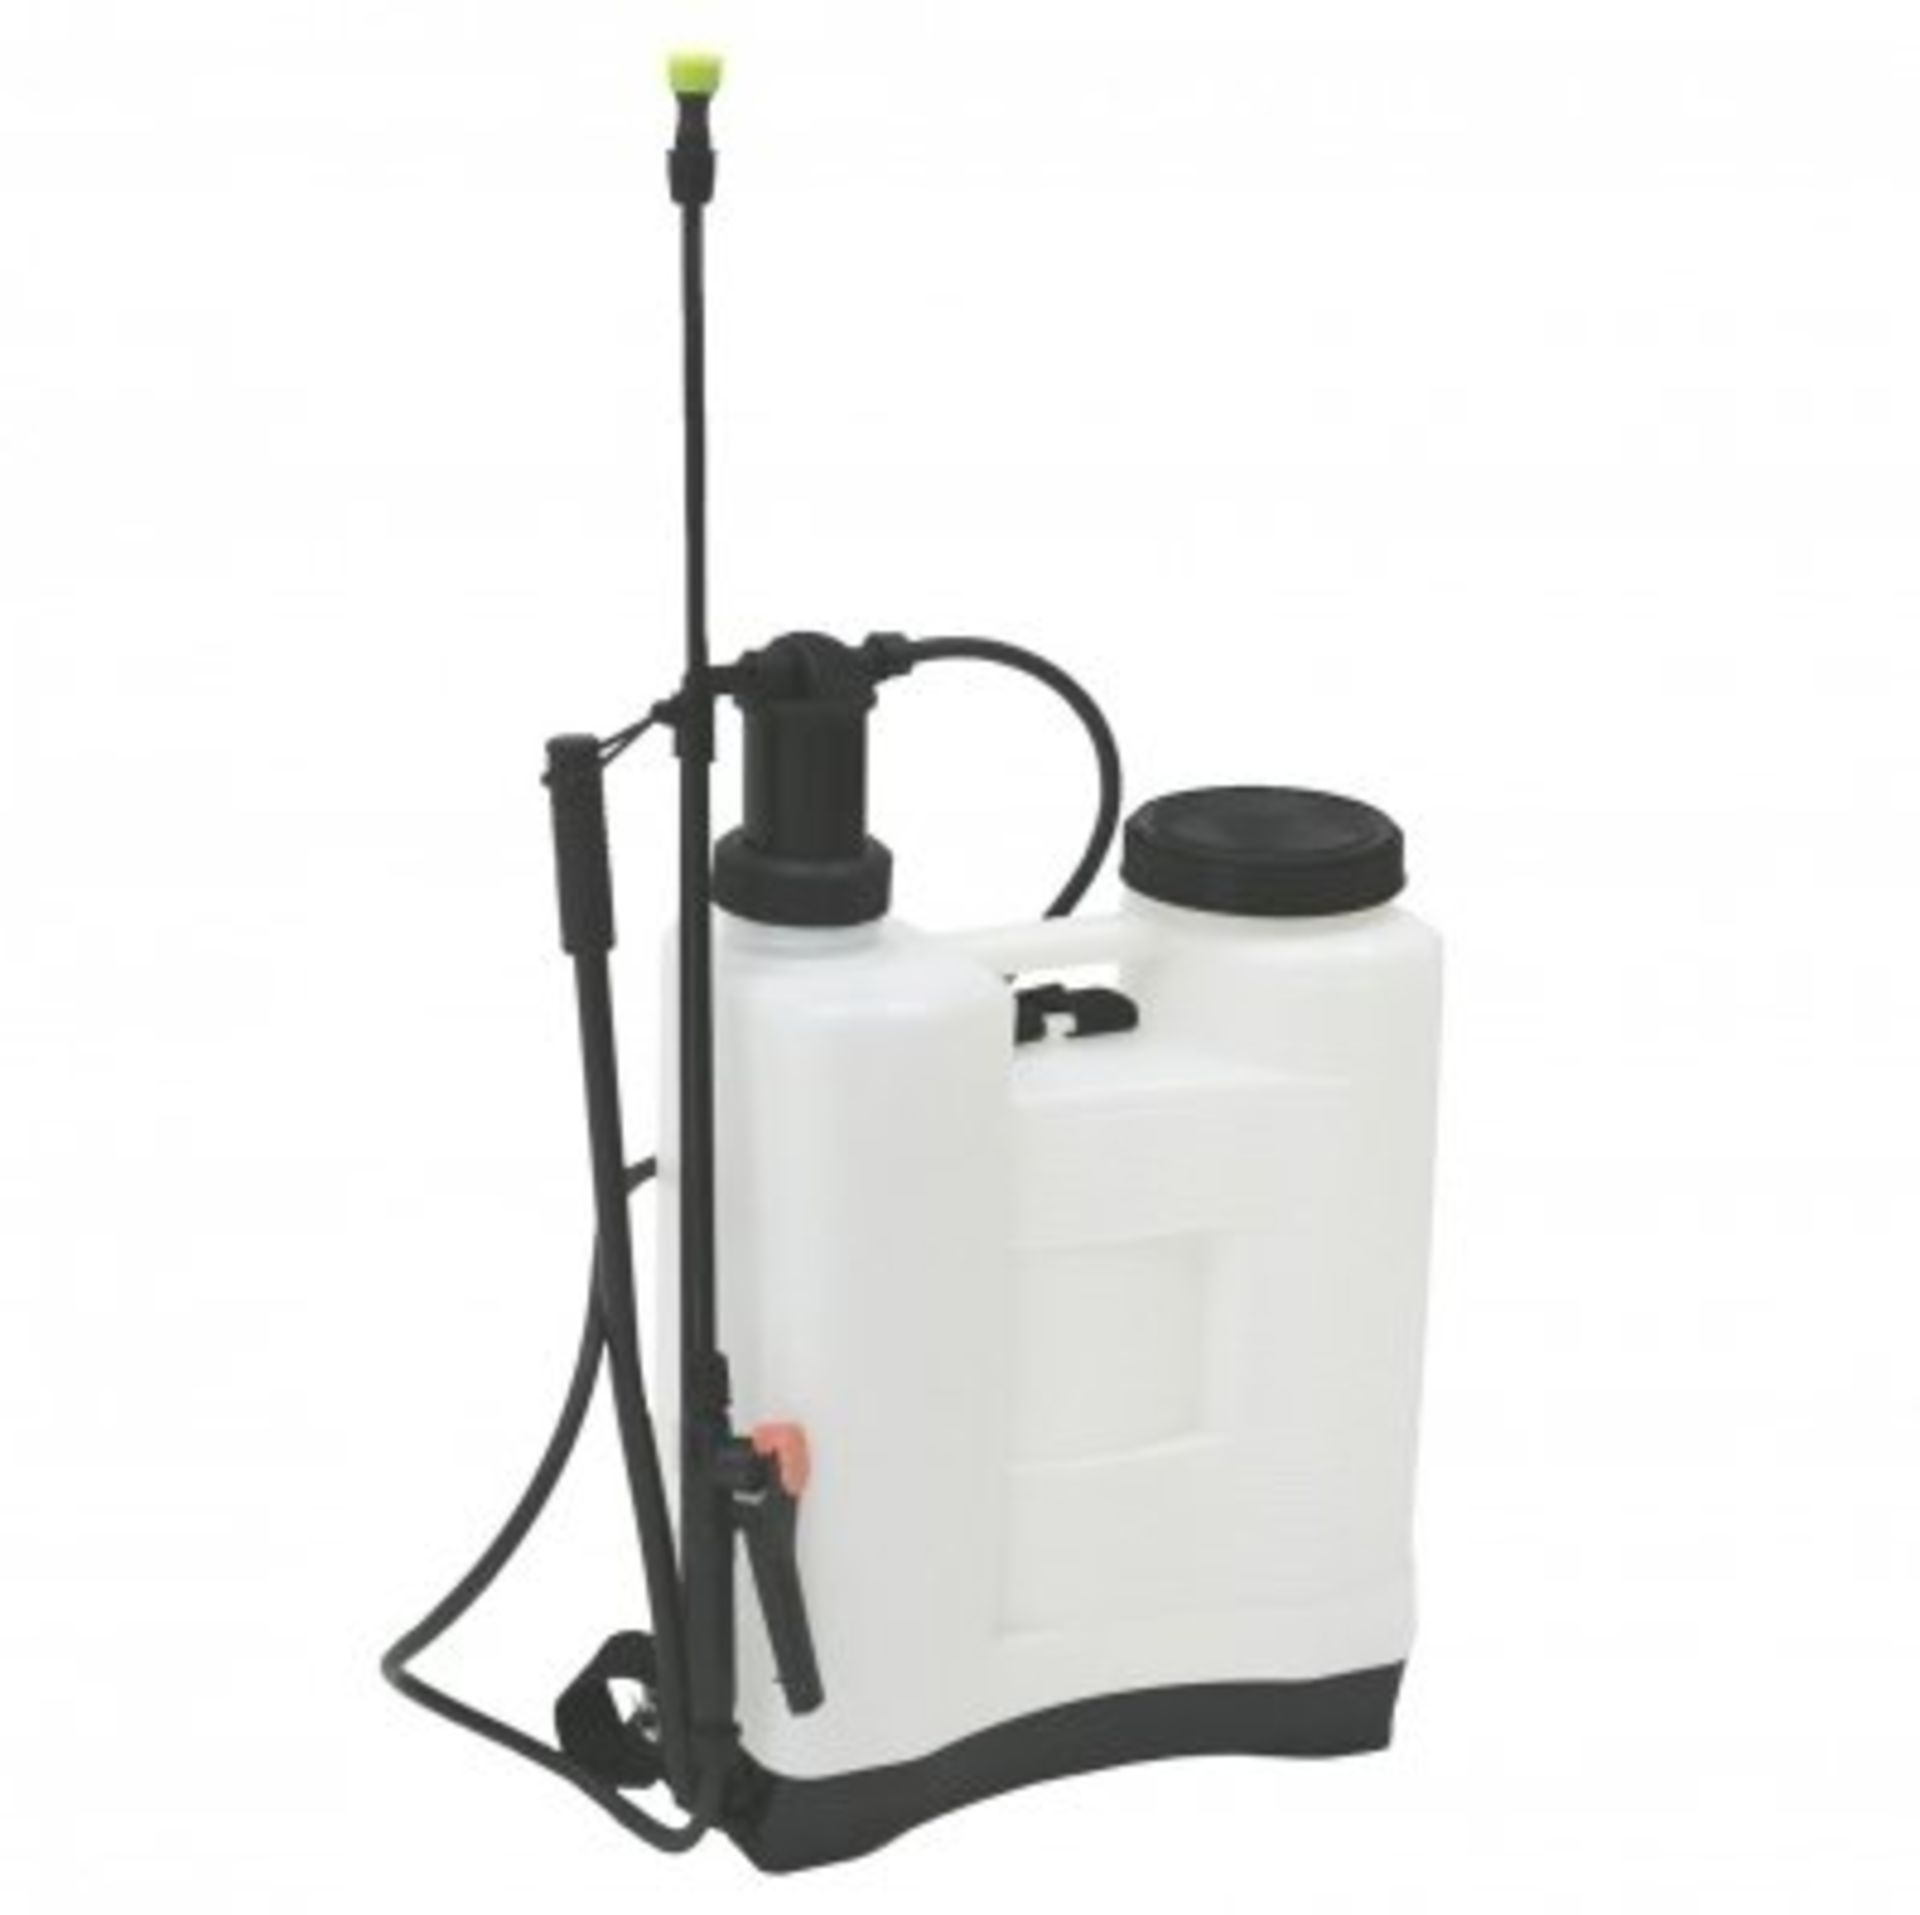 (RU326) 20L 20 Litre Backpack Knapsack Pressure Crop Garden Weed Sprayer The knapsack spraye...